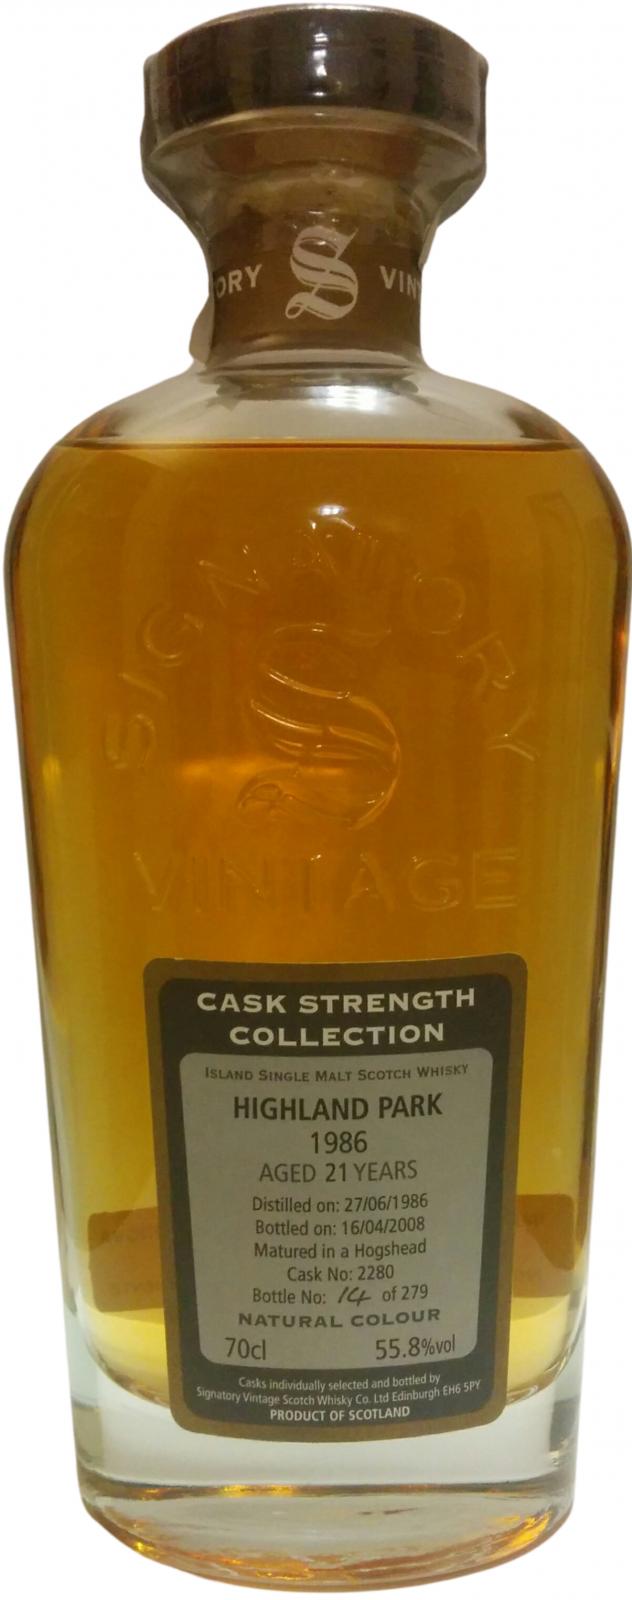 Highland Park 1986 SV Cask Strength Collection #2280 55.8% 700ml